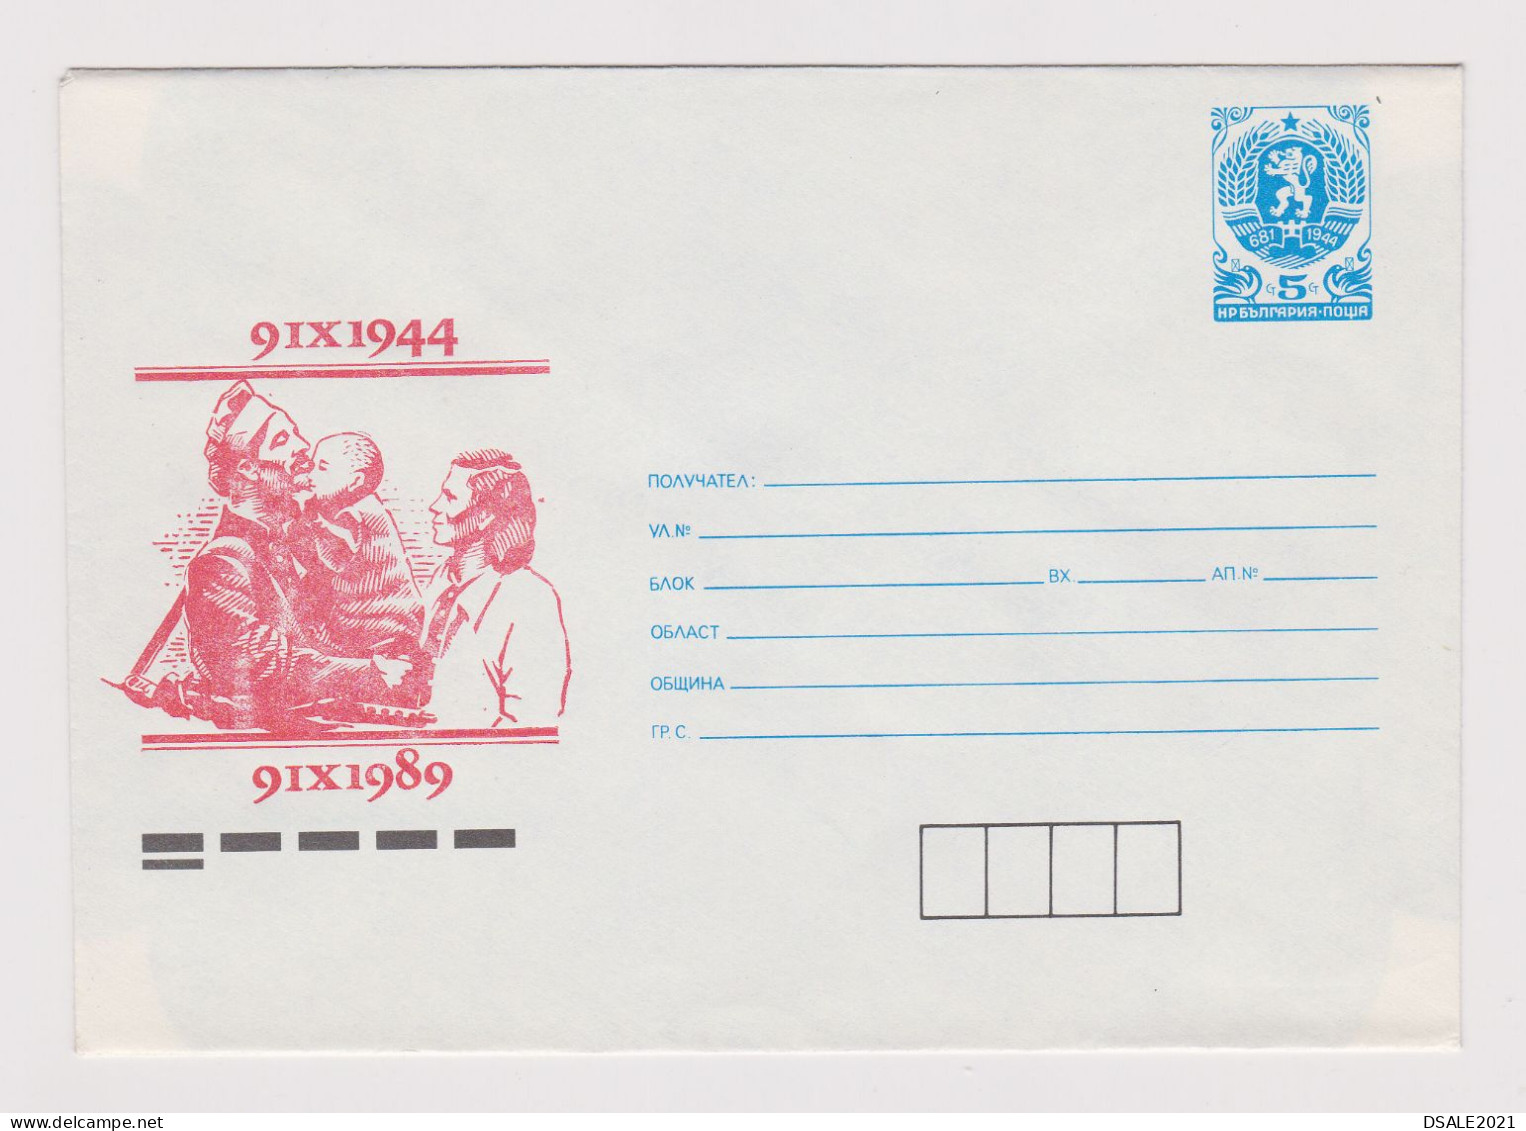 Bulgaria Bulgarien Ganzsachen Brief, Entier, Postal Stationery Cover PSE, 1944-1989 Communist Propaganda Unused 839 - Enveloppes